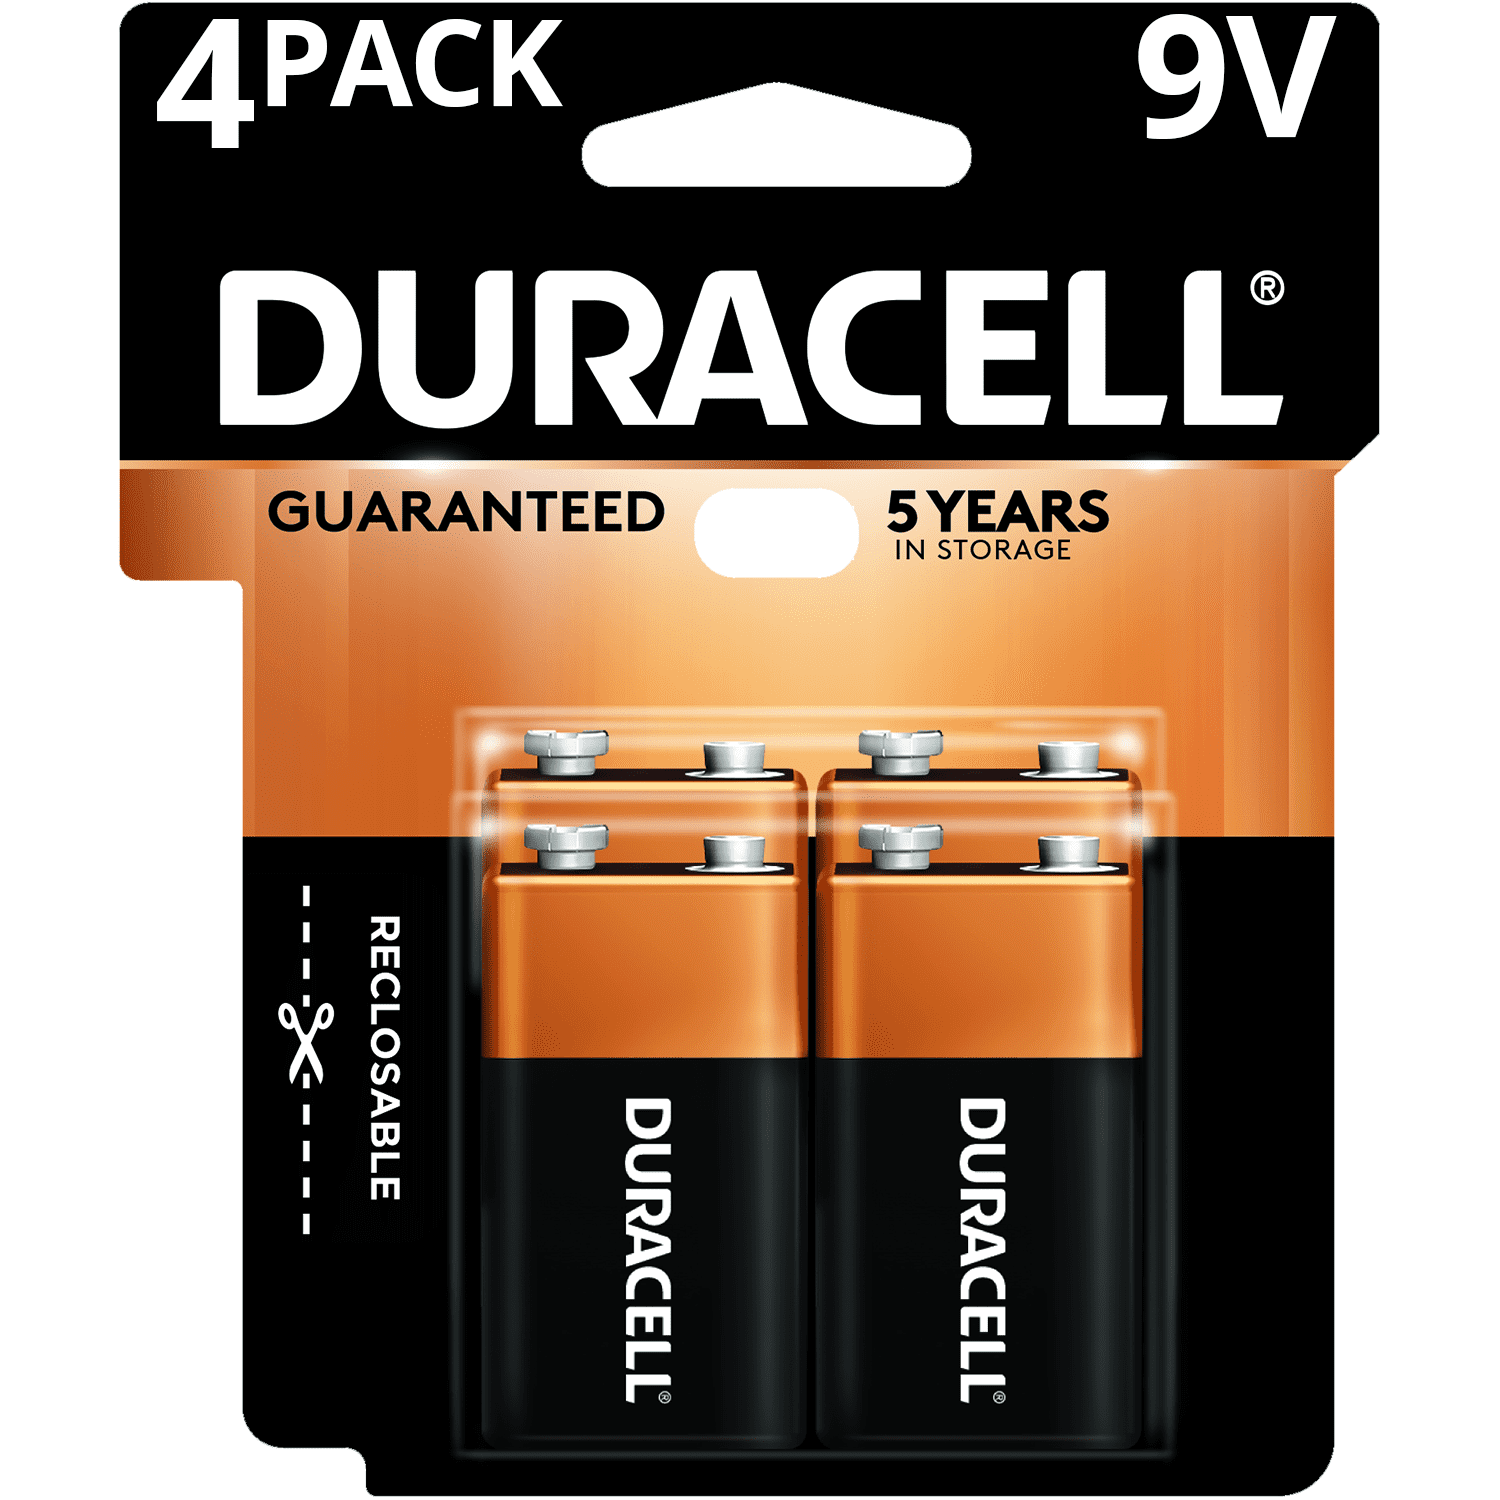 Элемент питания 9v. Батарейки Duracell 9v. Duracell Coppertop 9v Battery. Батарейка алкалиновая Duracell 6f22 9v (6lr61 -9v) 1 шт.. Элемент питания Duracell 409.9 печать.